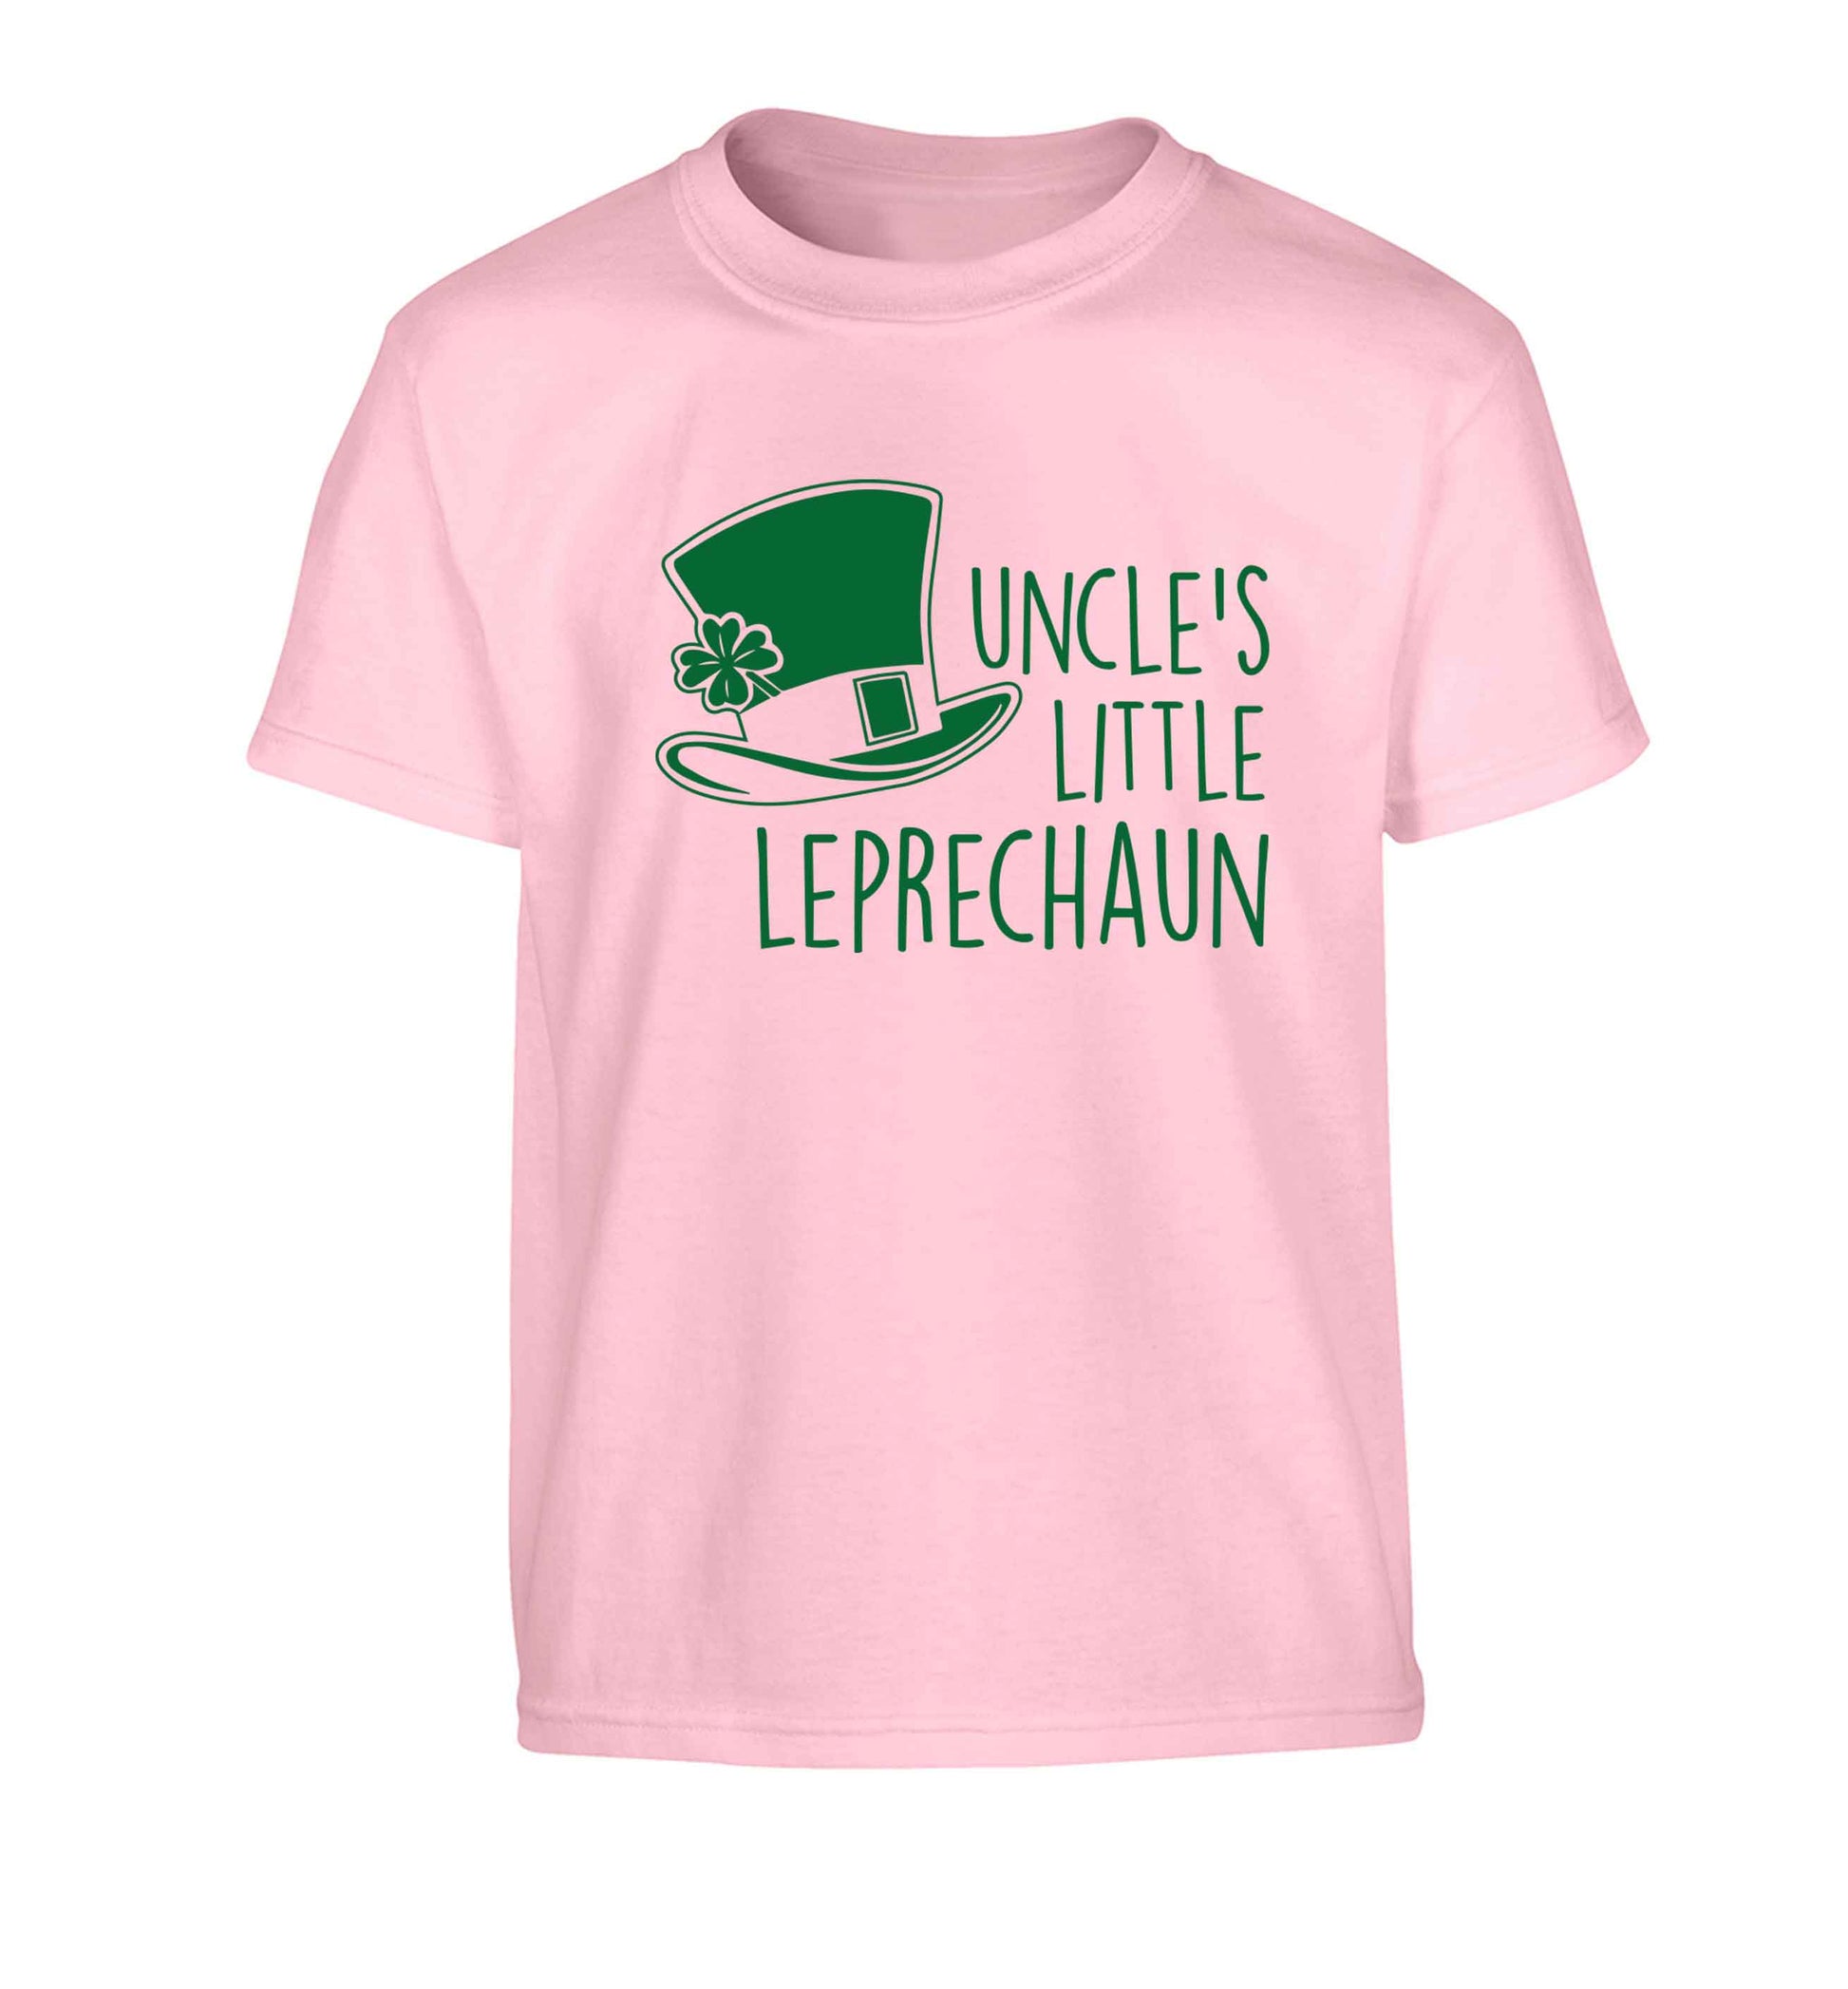 Uncles little leprechaun Children's light pink Tshirt 12-13 Years